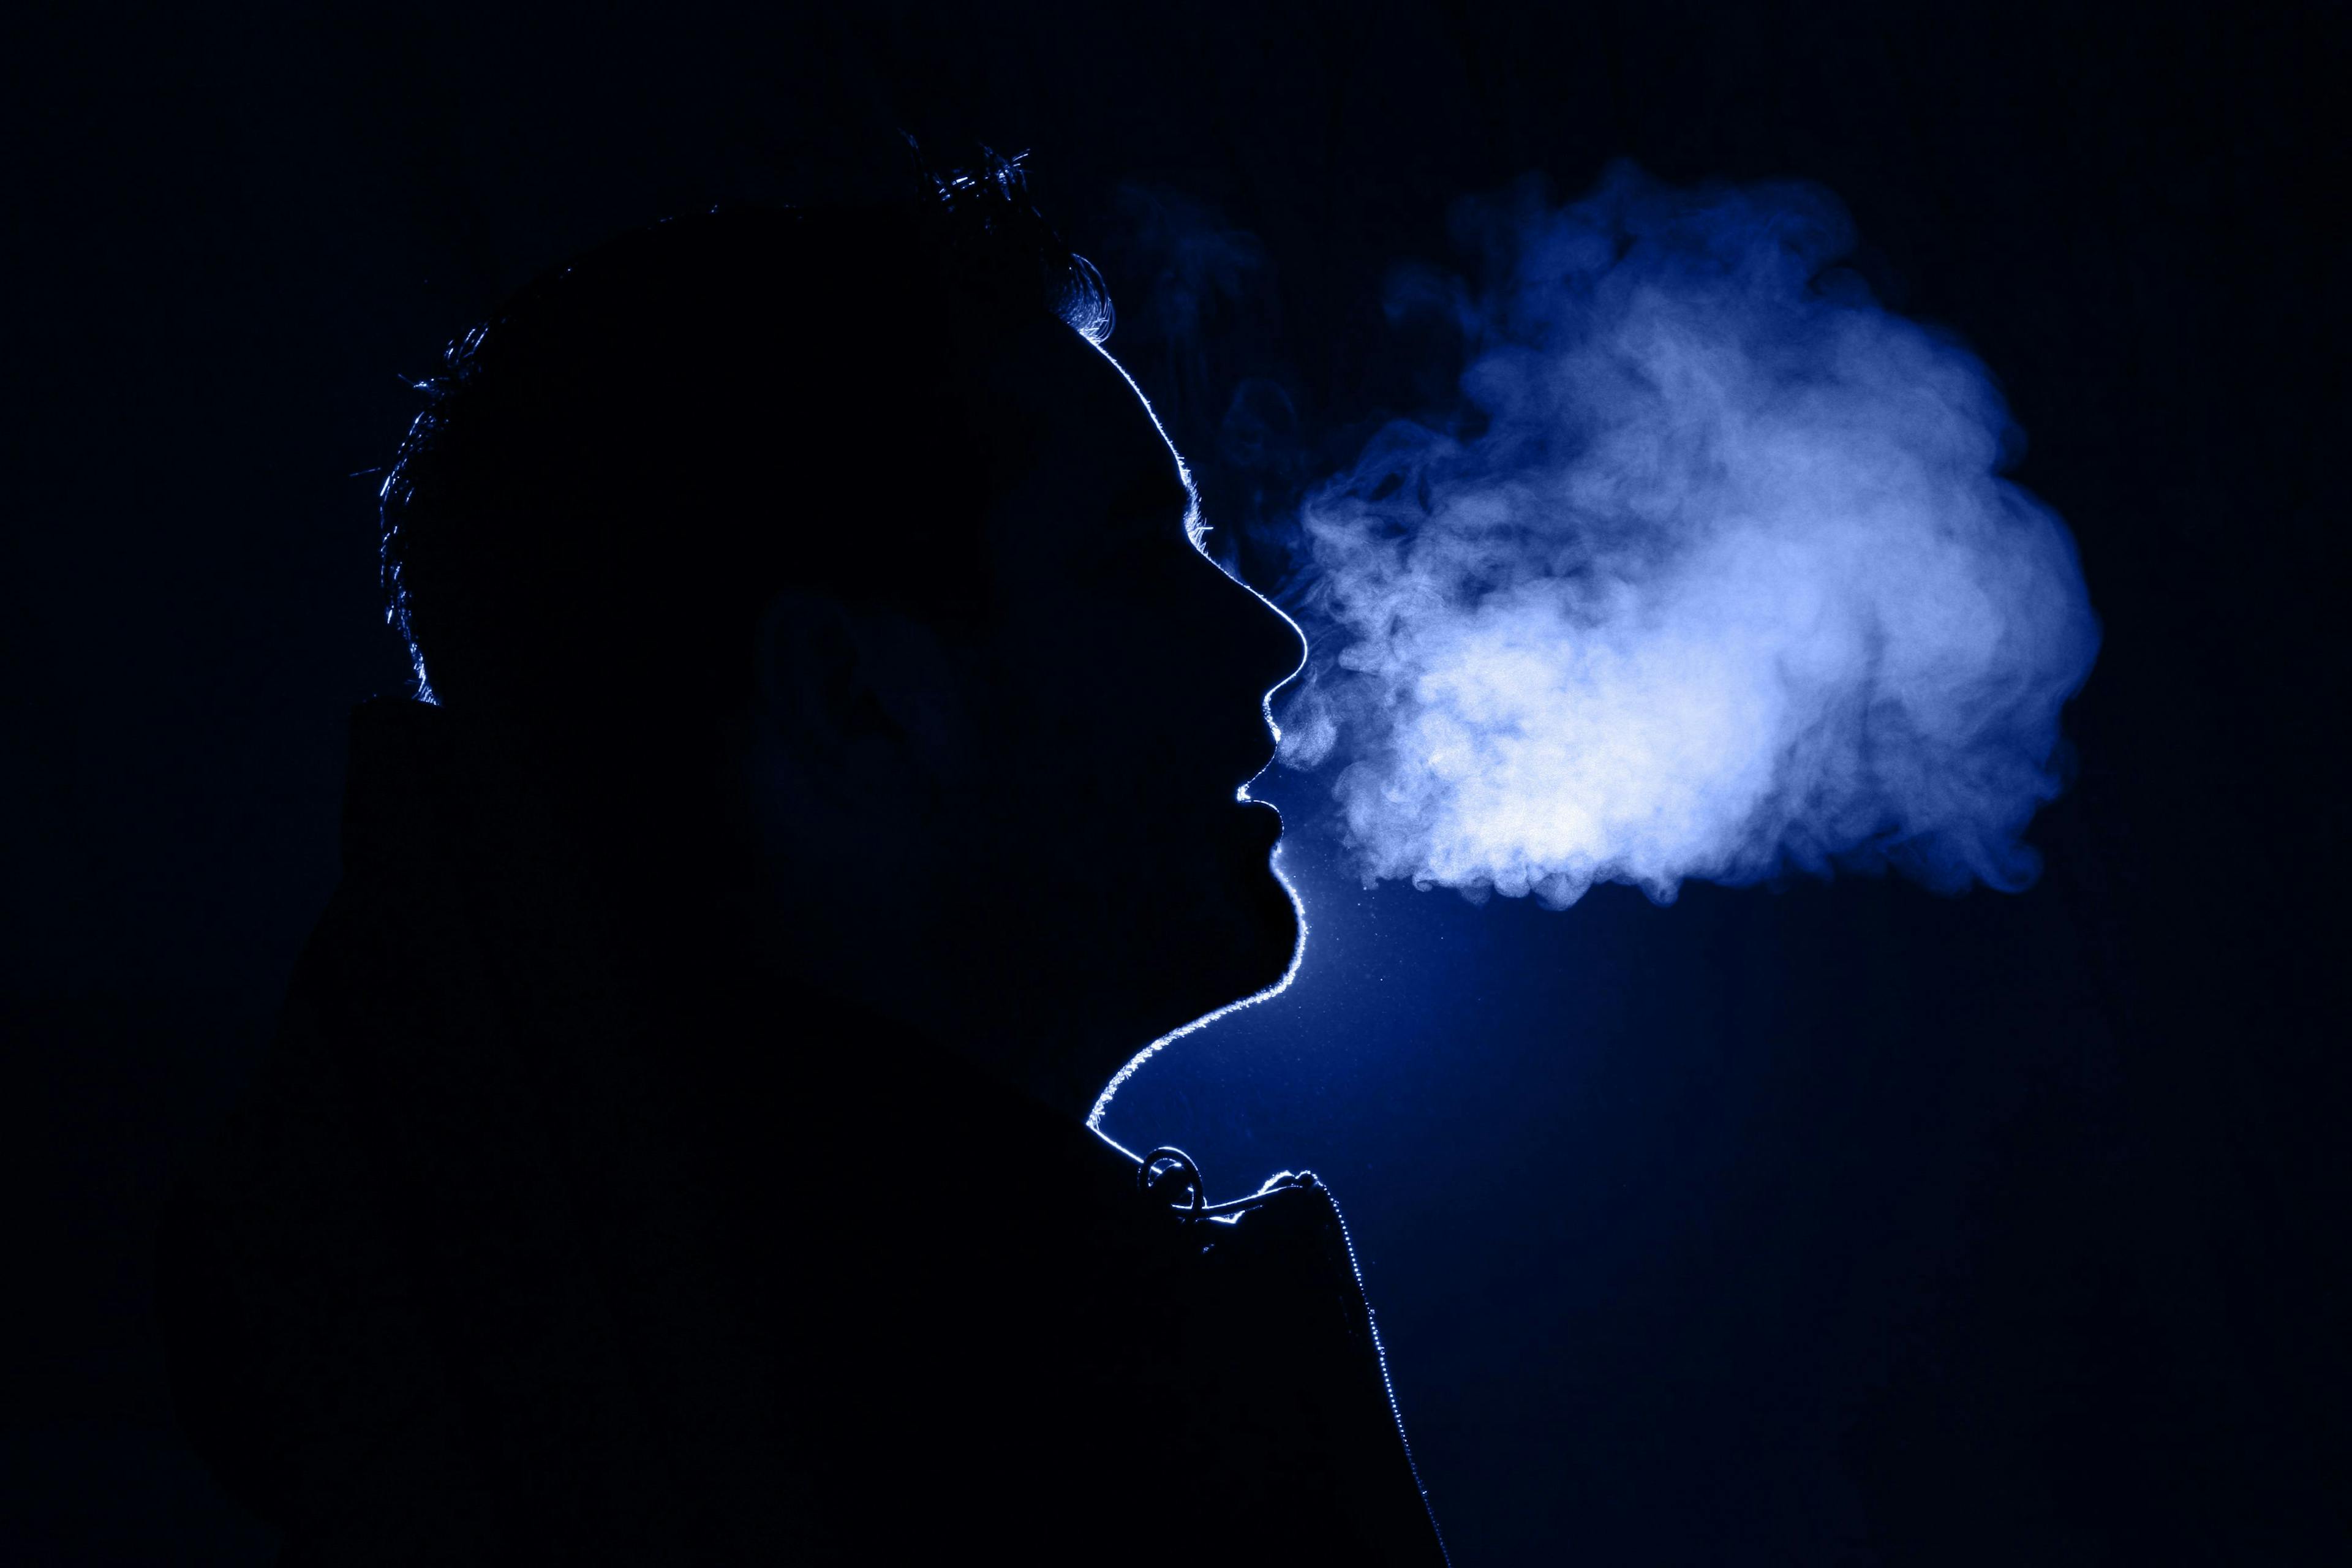 Man exhaling warm breath | Image Credit: © JRP Studio - stock.adobe.com